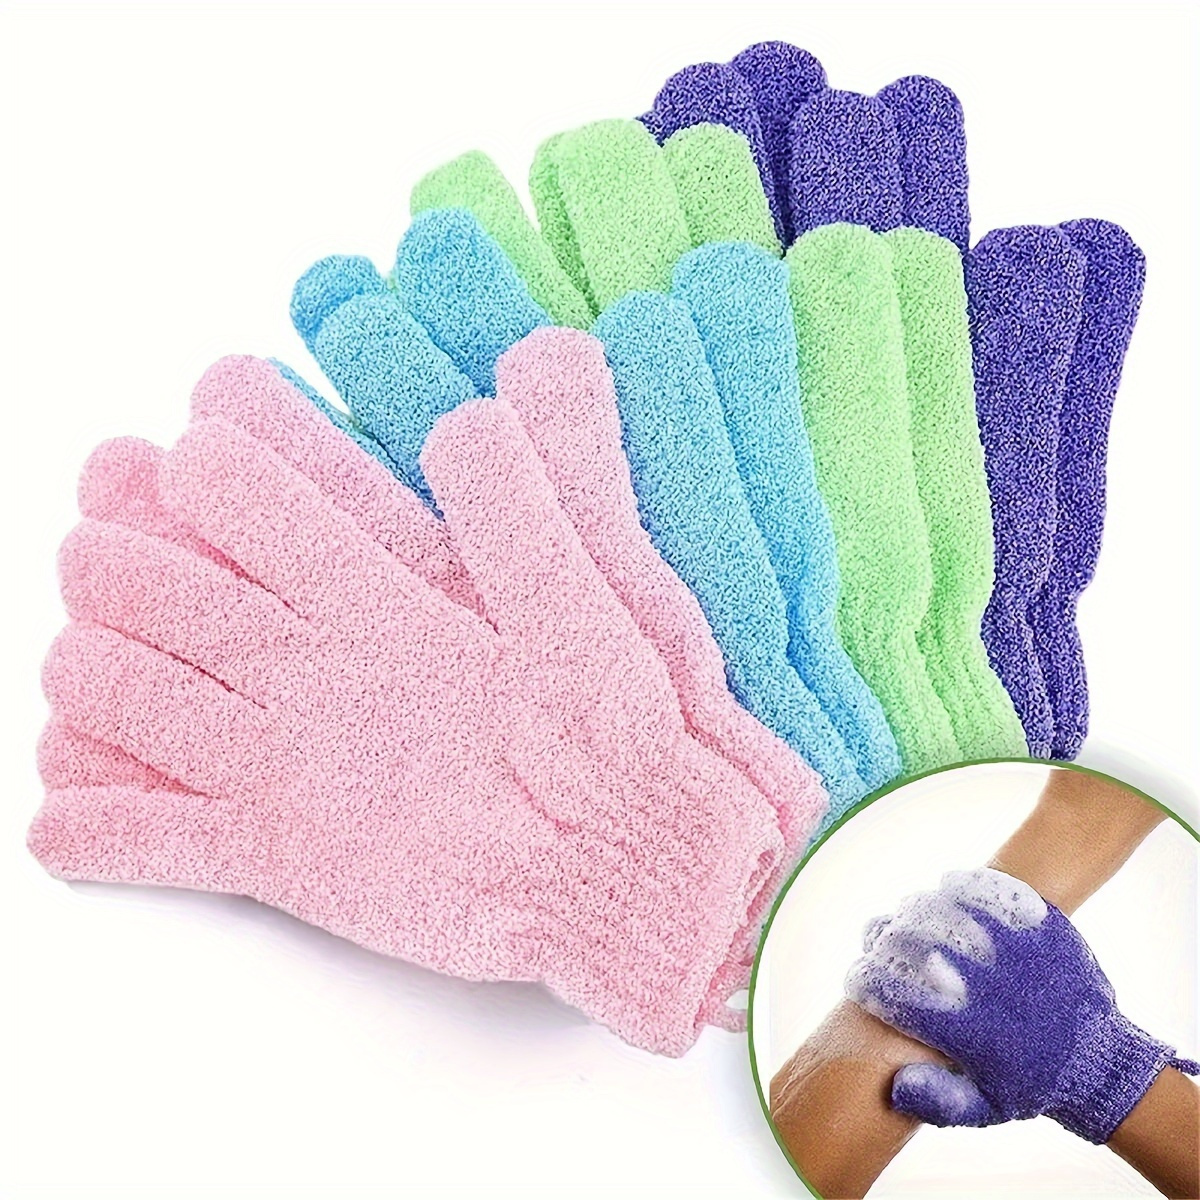 

10pcs Exfoliating Gloves, Bath Gloves For Shower, Double Sided Exfoliating Gloves, For Spa, Massage And Body Scrubs, Body Scrubber Bathing Accessories - Bathroom Accessories